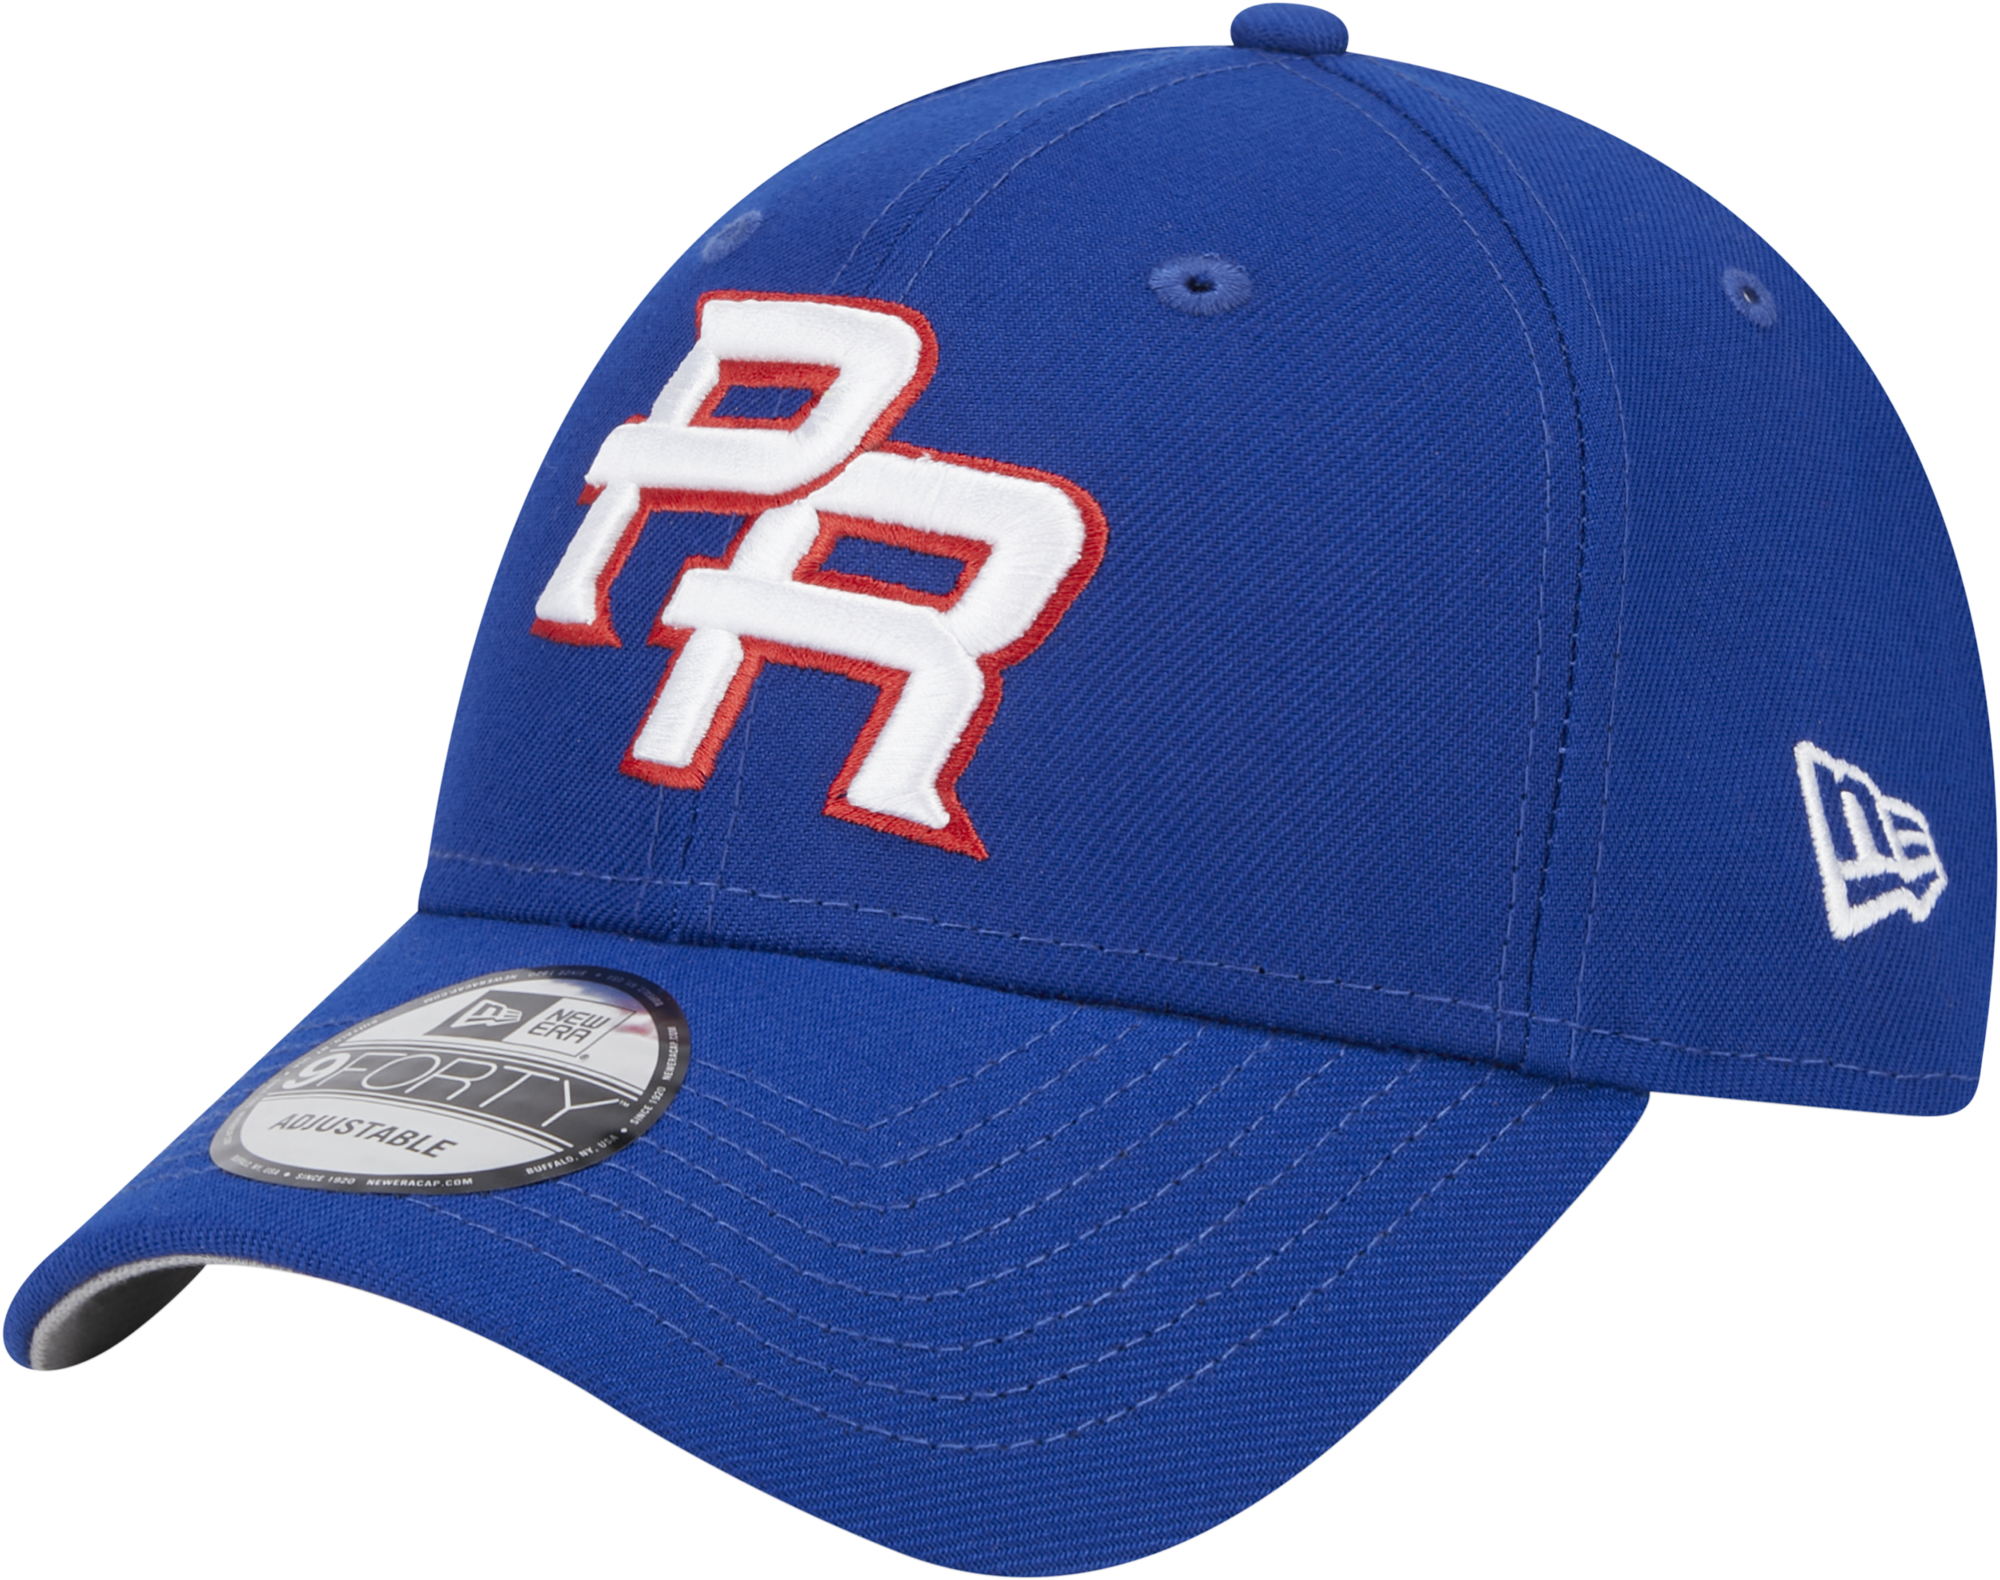 New Era Puerto Rico WBC Adjustable Hat